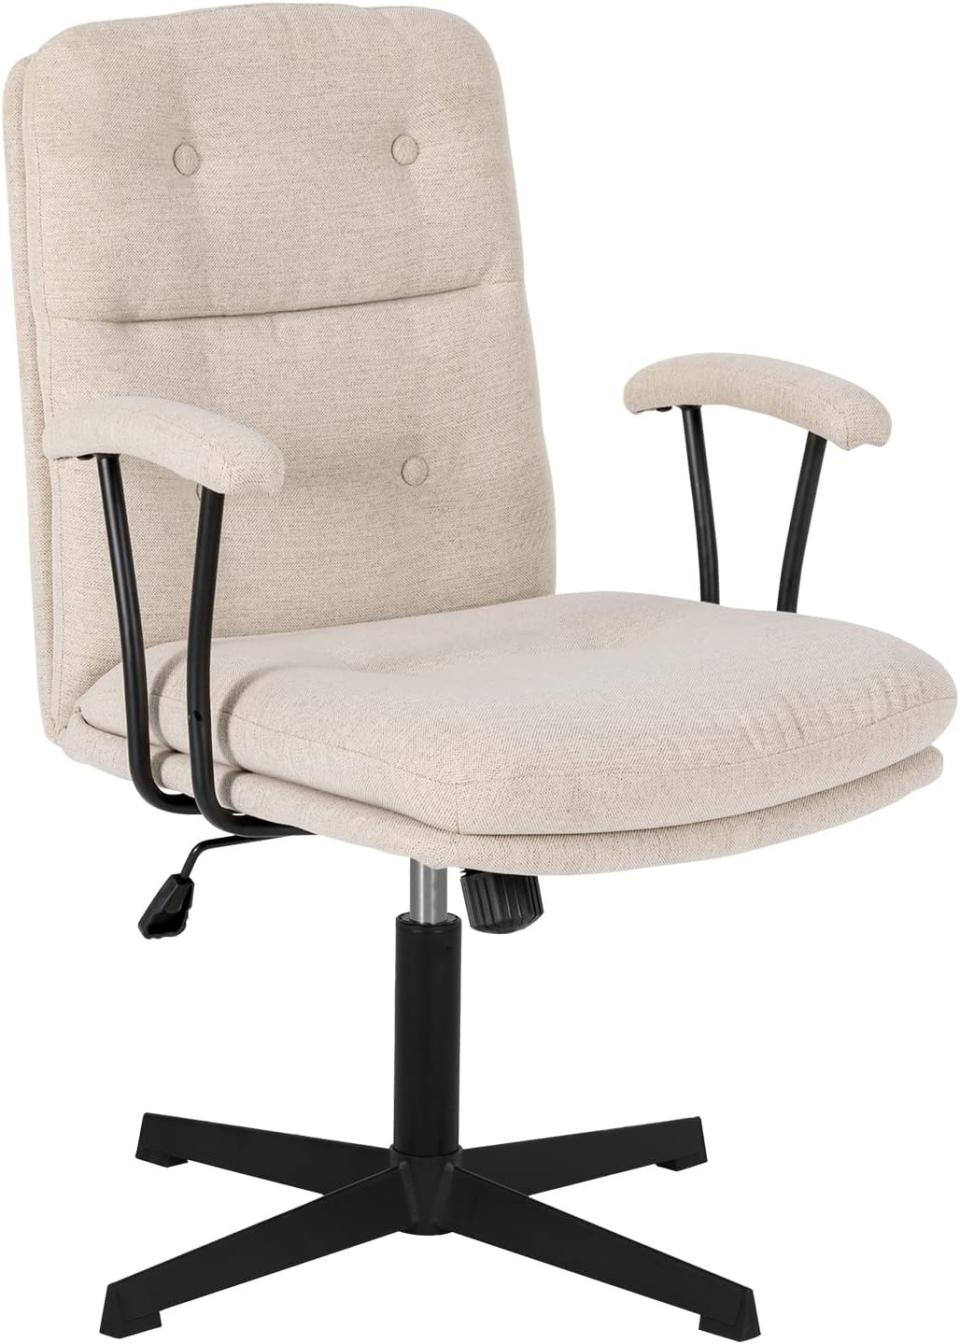 Okeysen modern desk chair